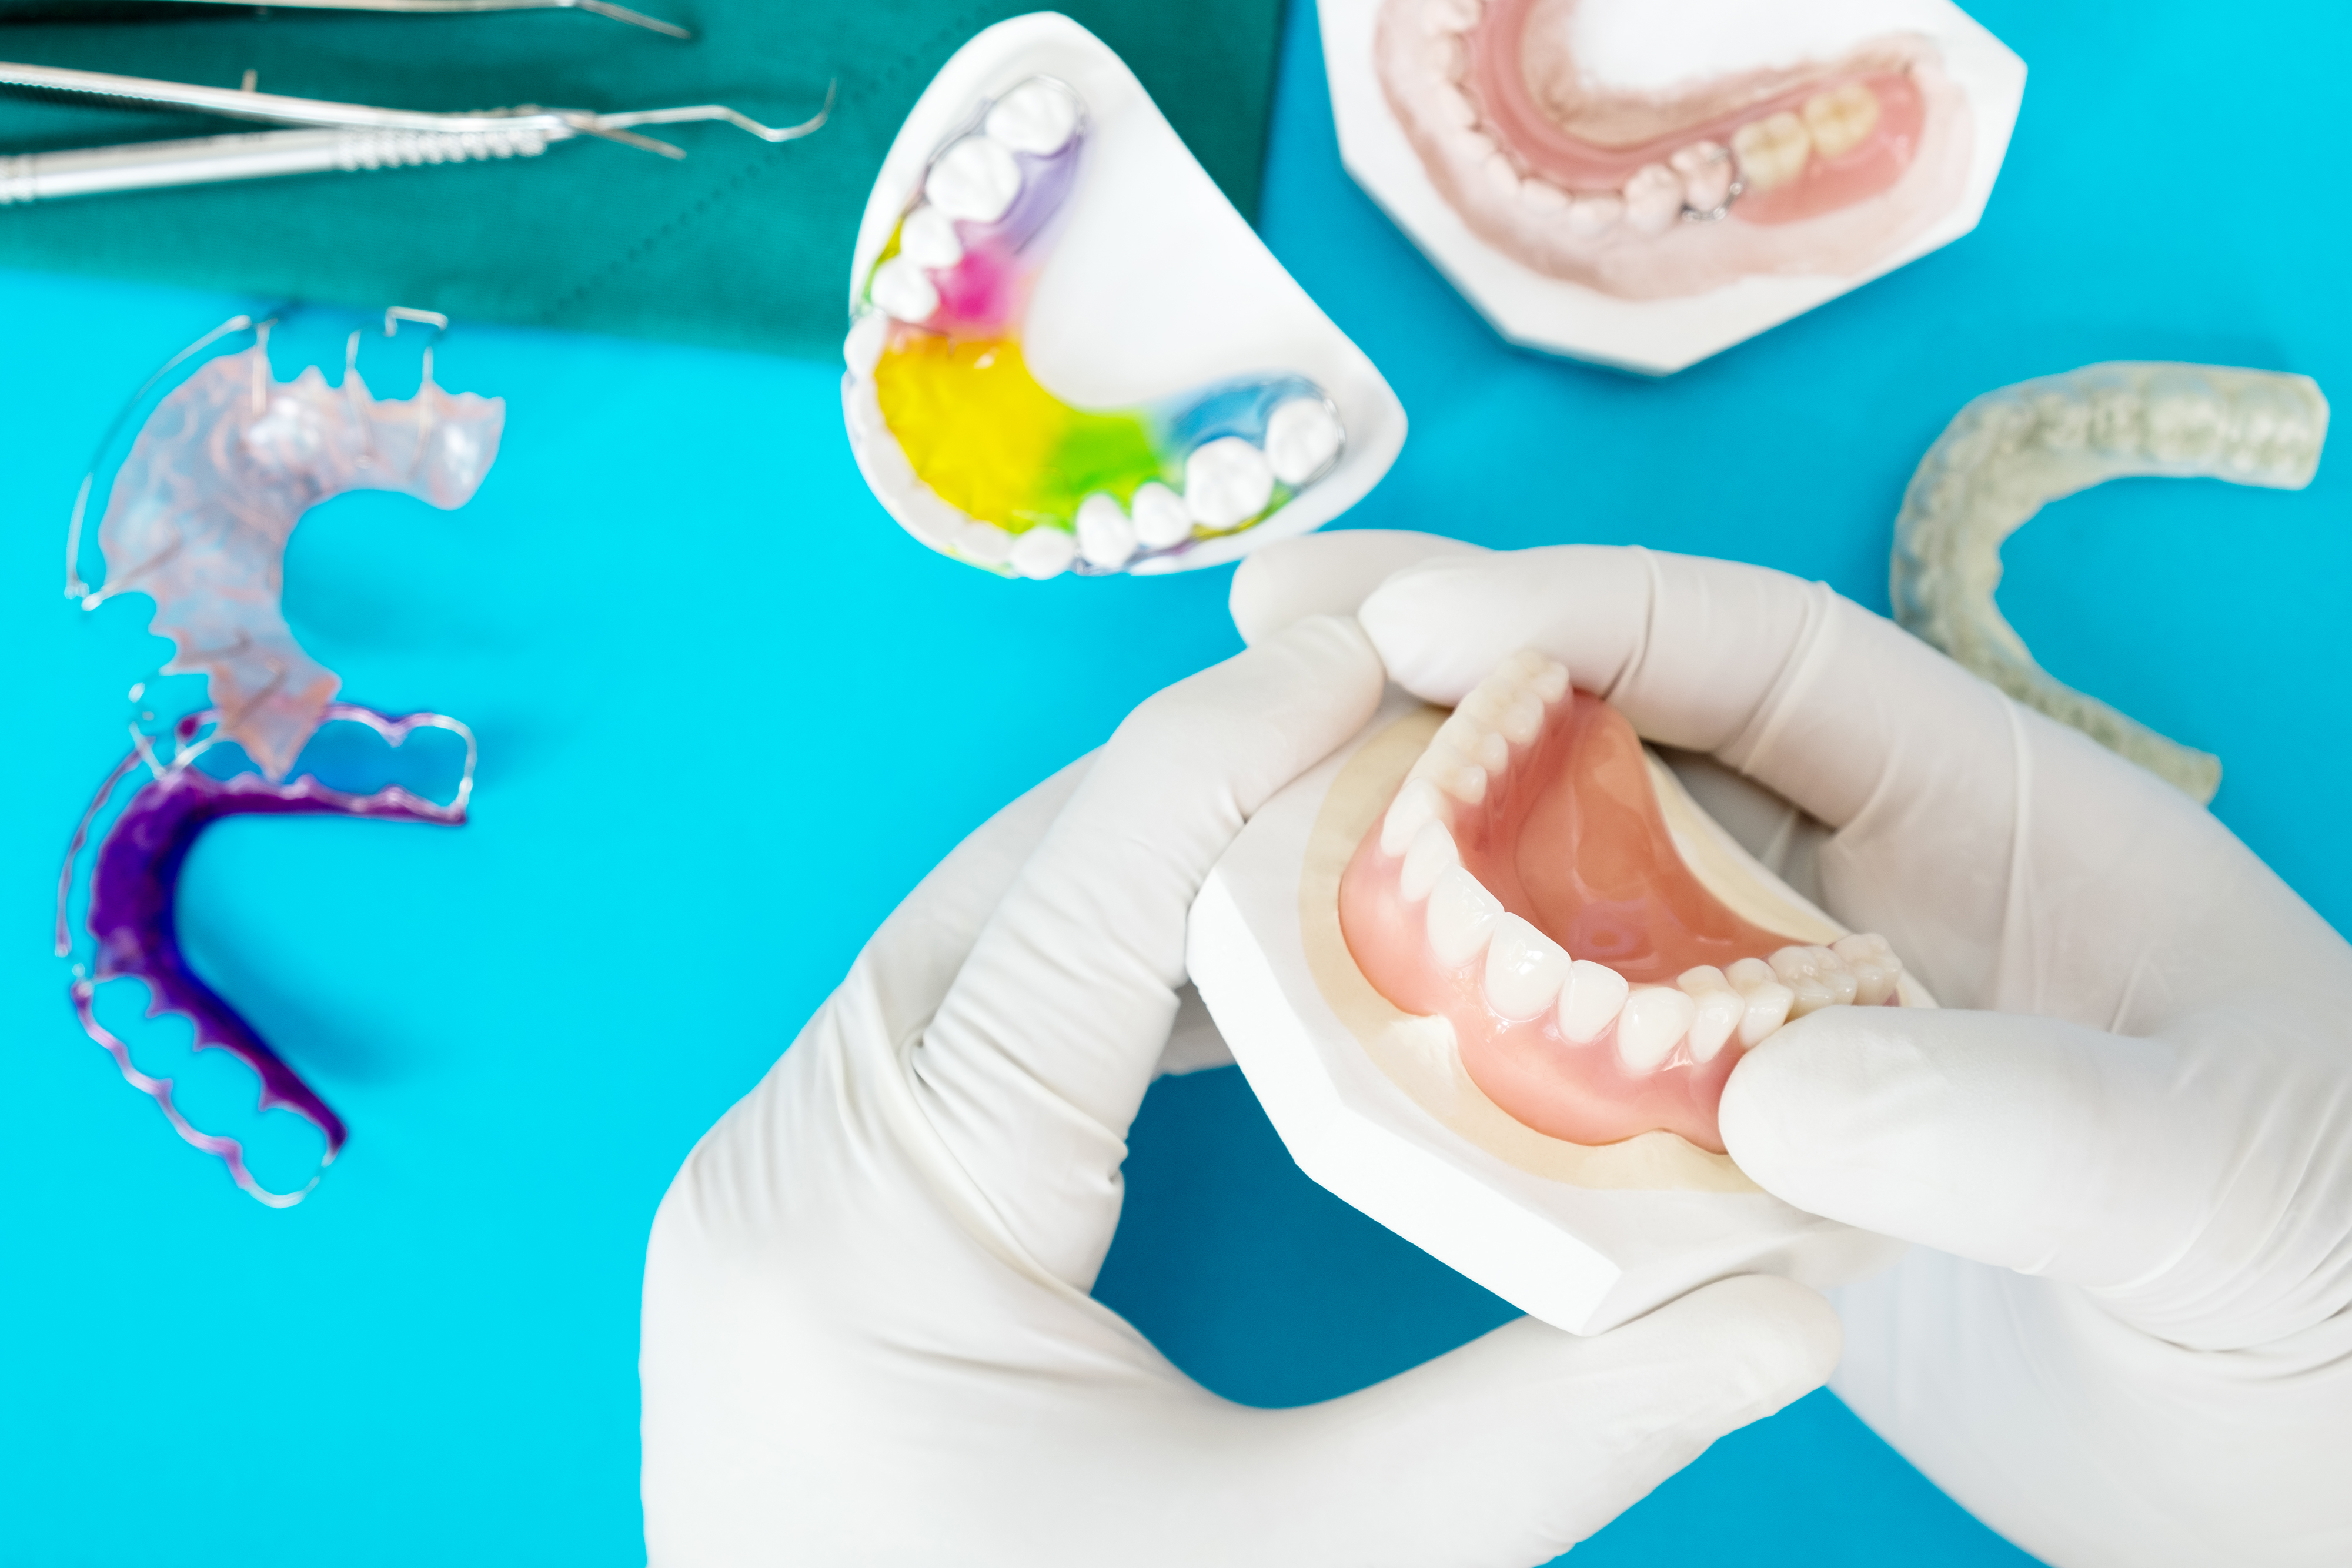 Complete denture or full denture on blue background.